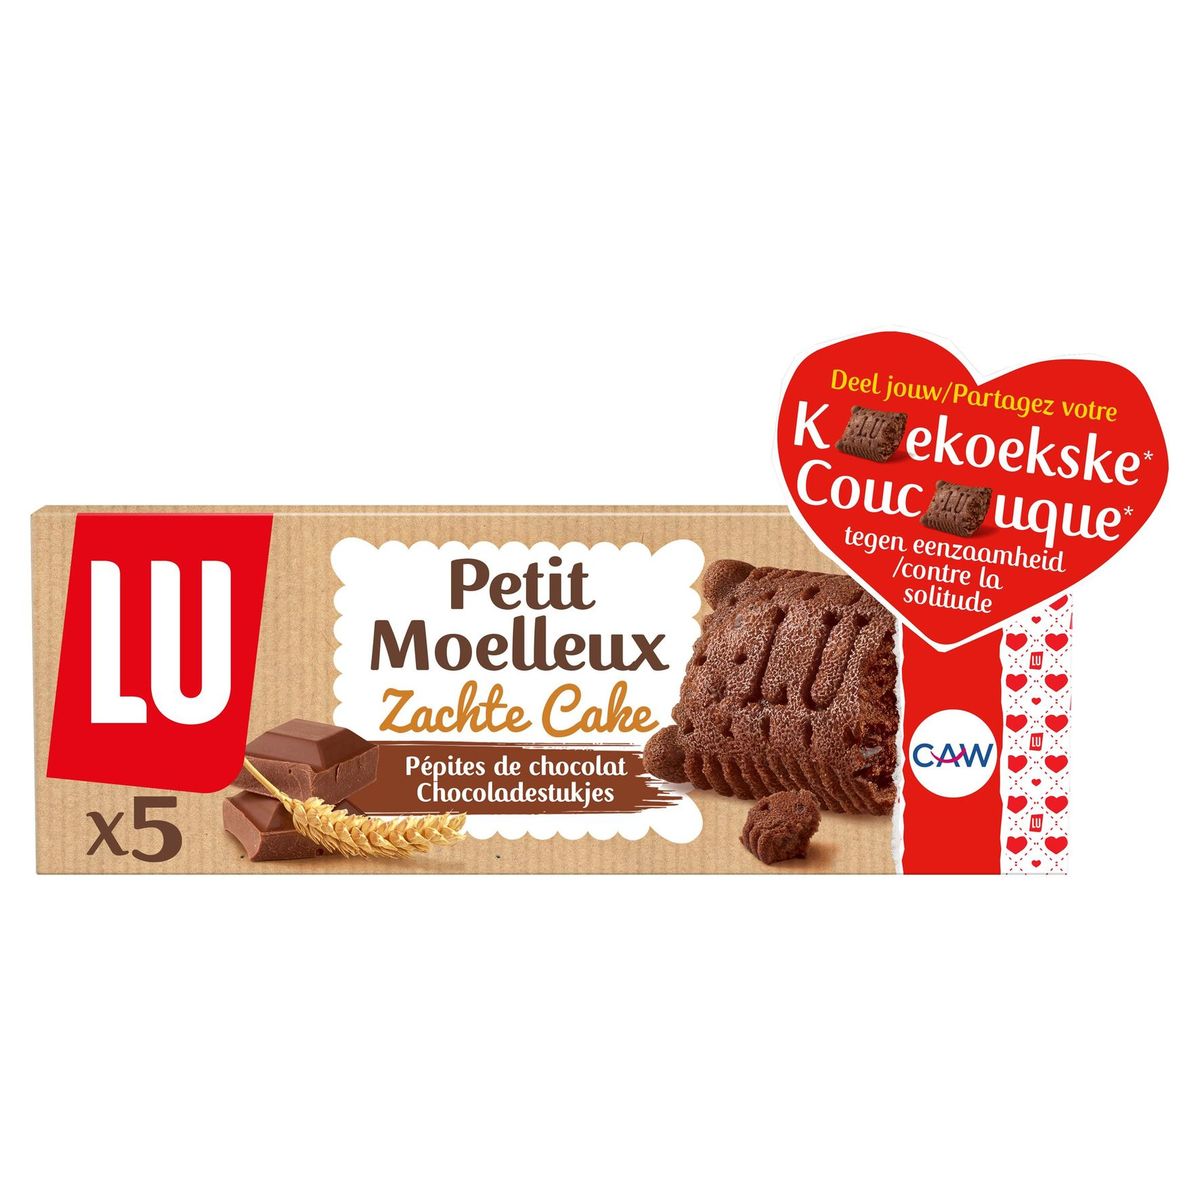 LU Petit LU Moelleux Cakes Chocolat 140 g